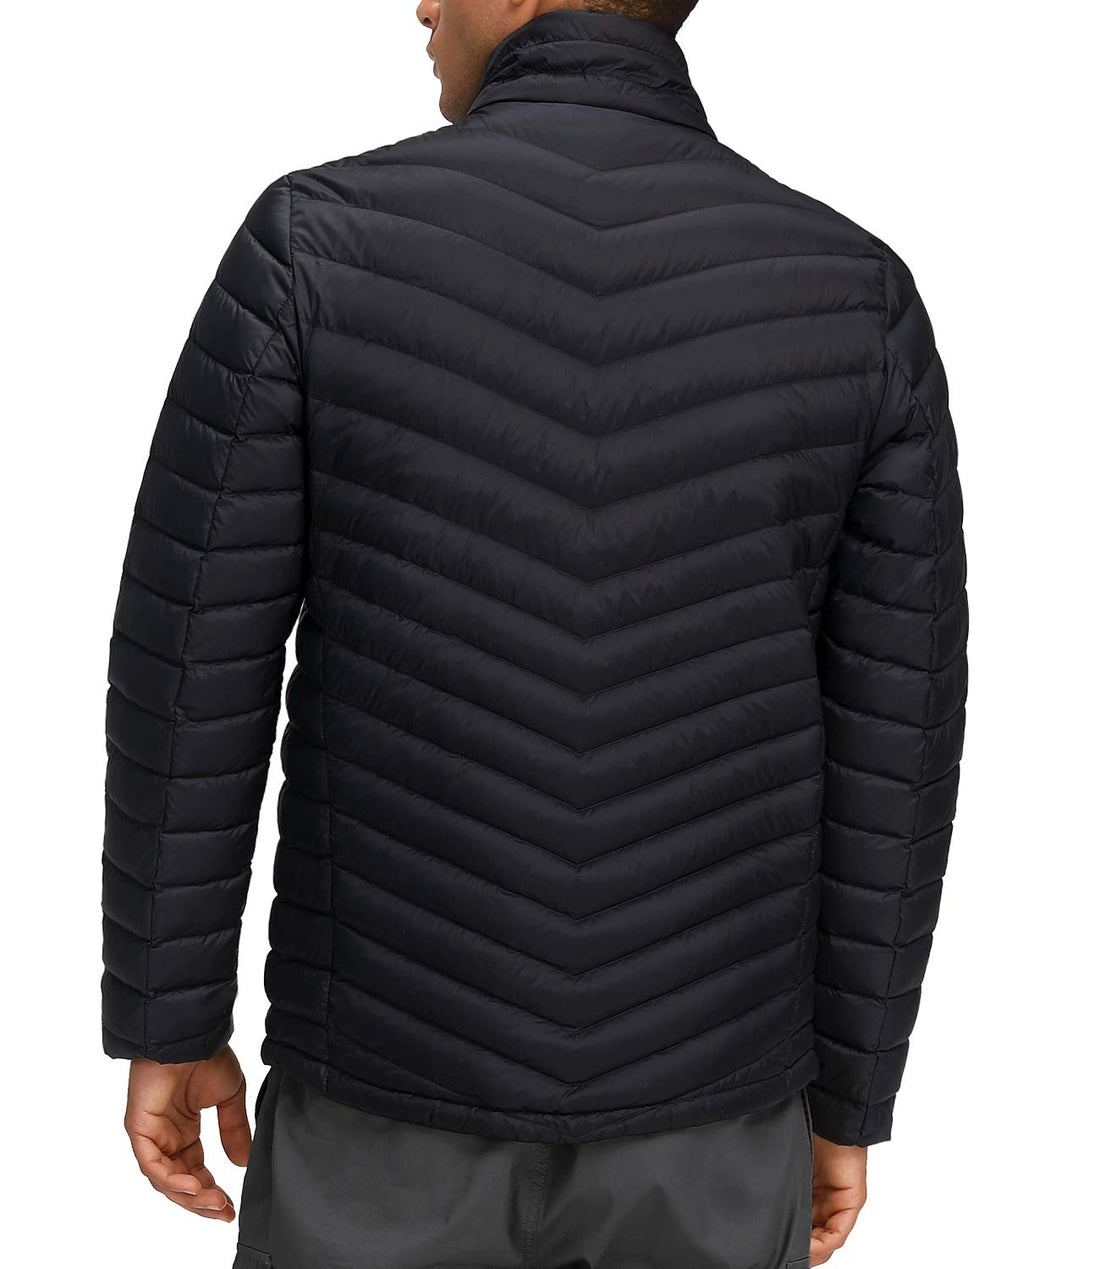 CAMEL CROWN Men's Packable Down Jacket Insulated Lightweight Puffer Winter Coats Outerwear Windproof Travel Outdoor Hiking